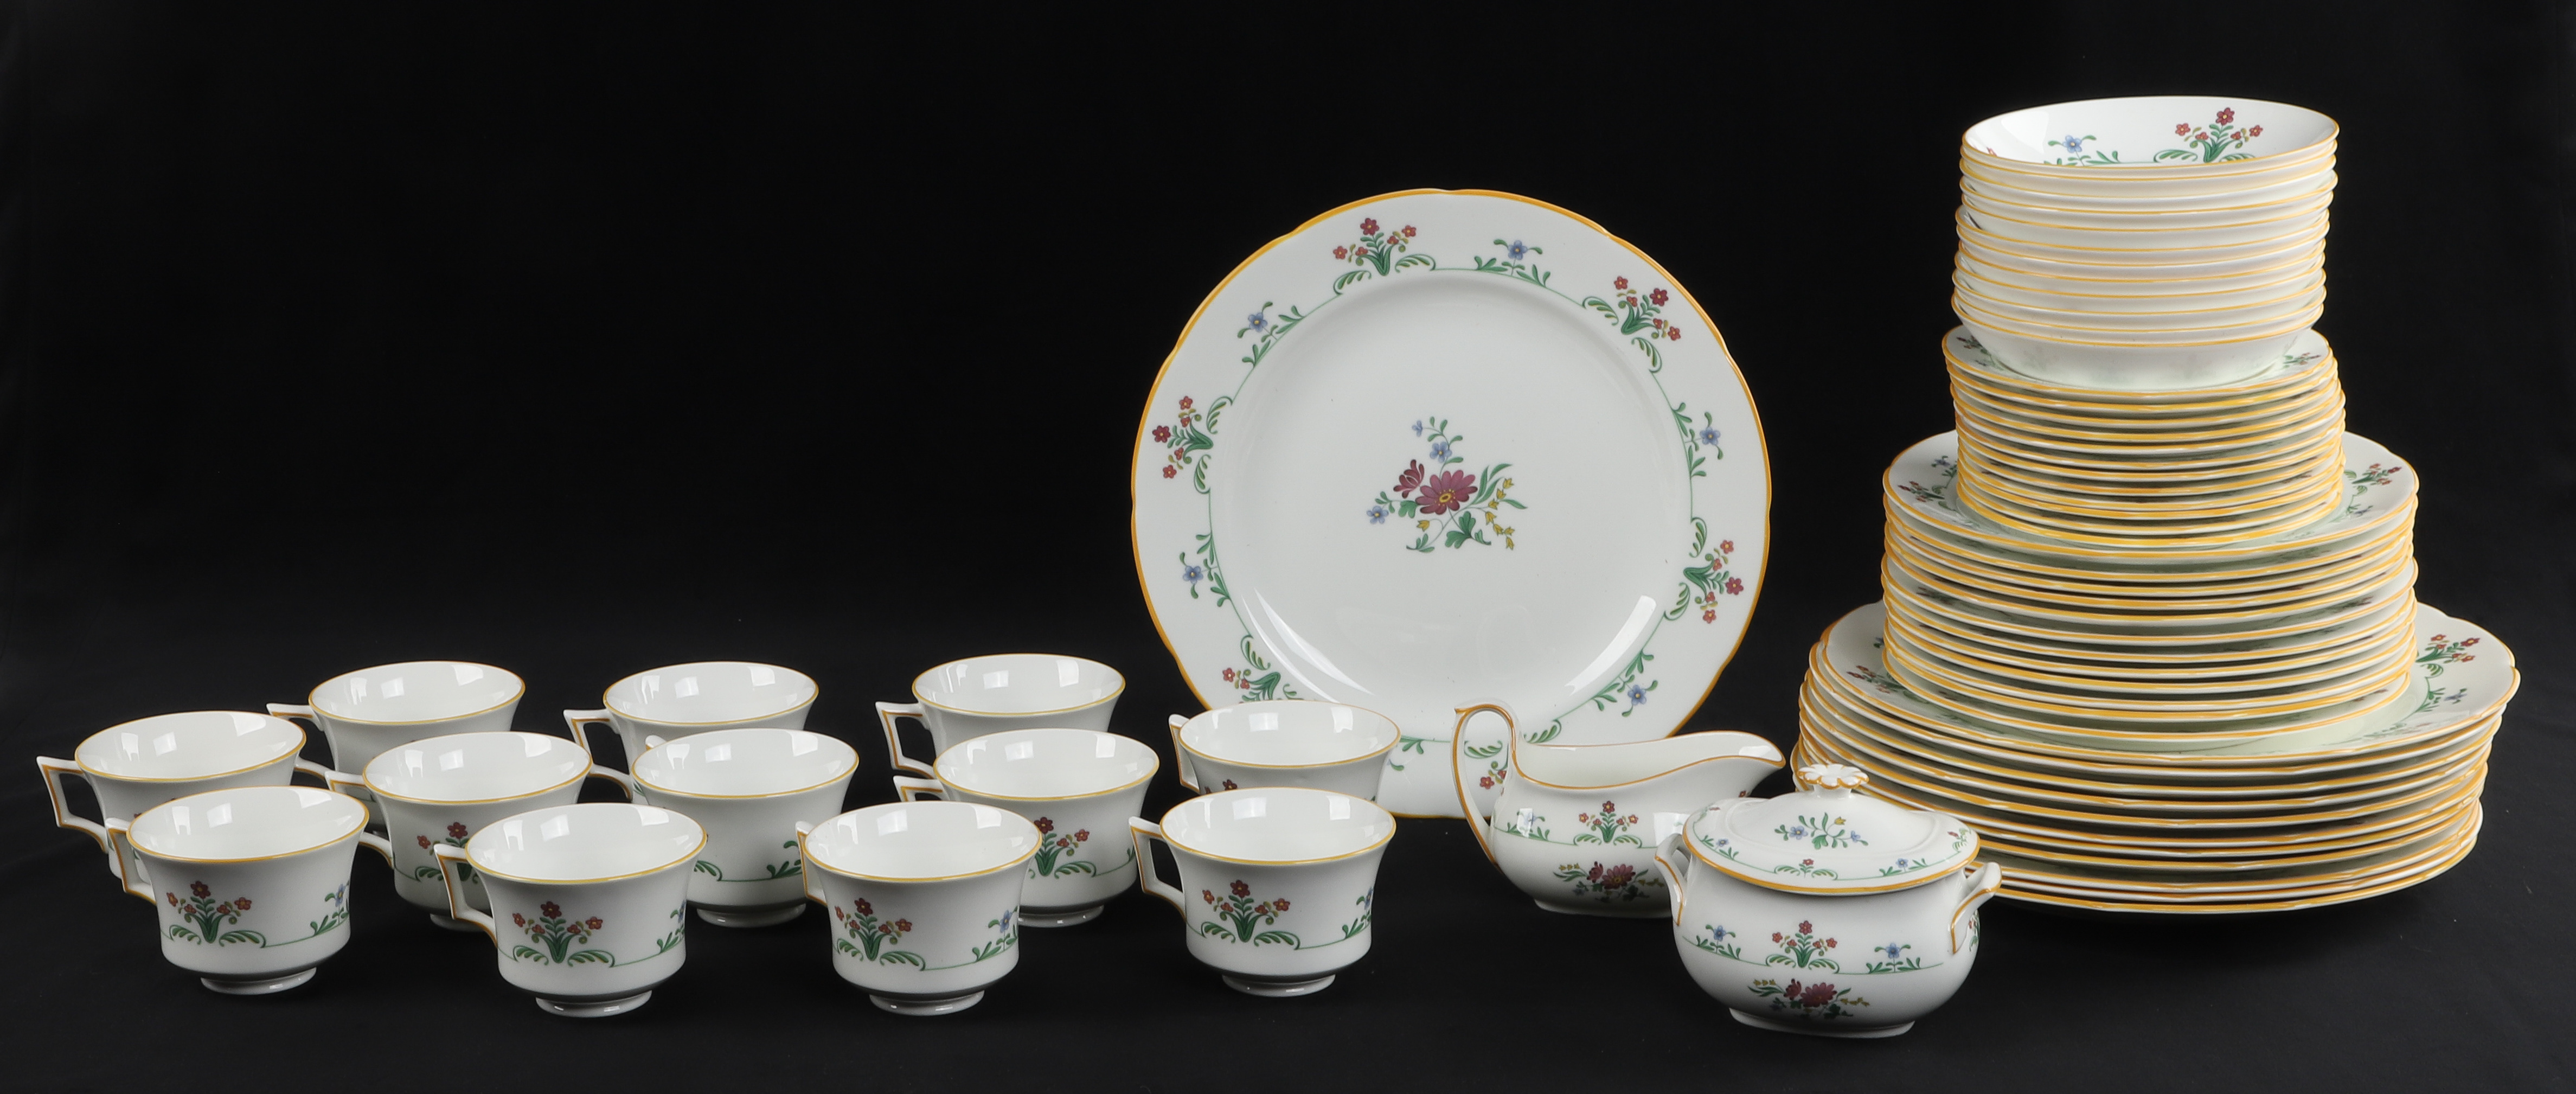 (62) Pcs Wedgwood porcelain dinnerware,